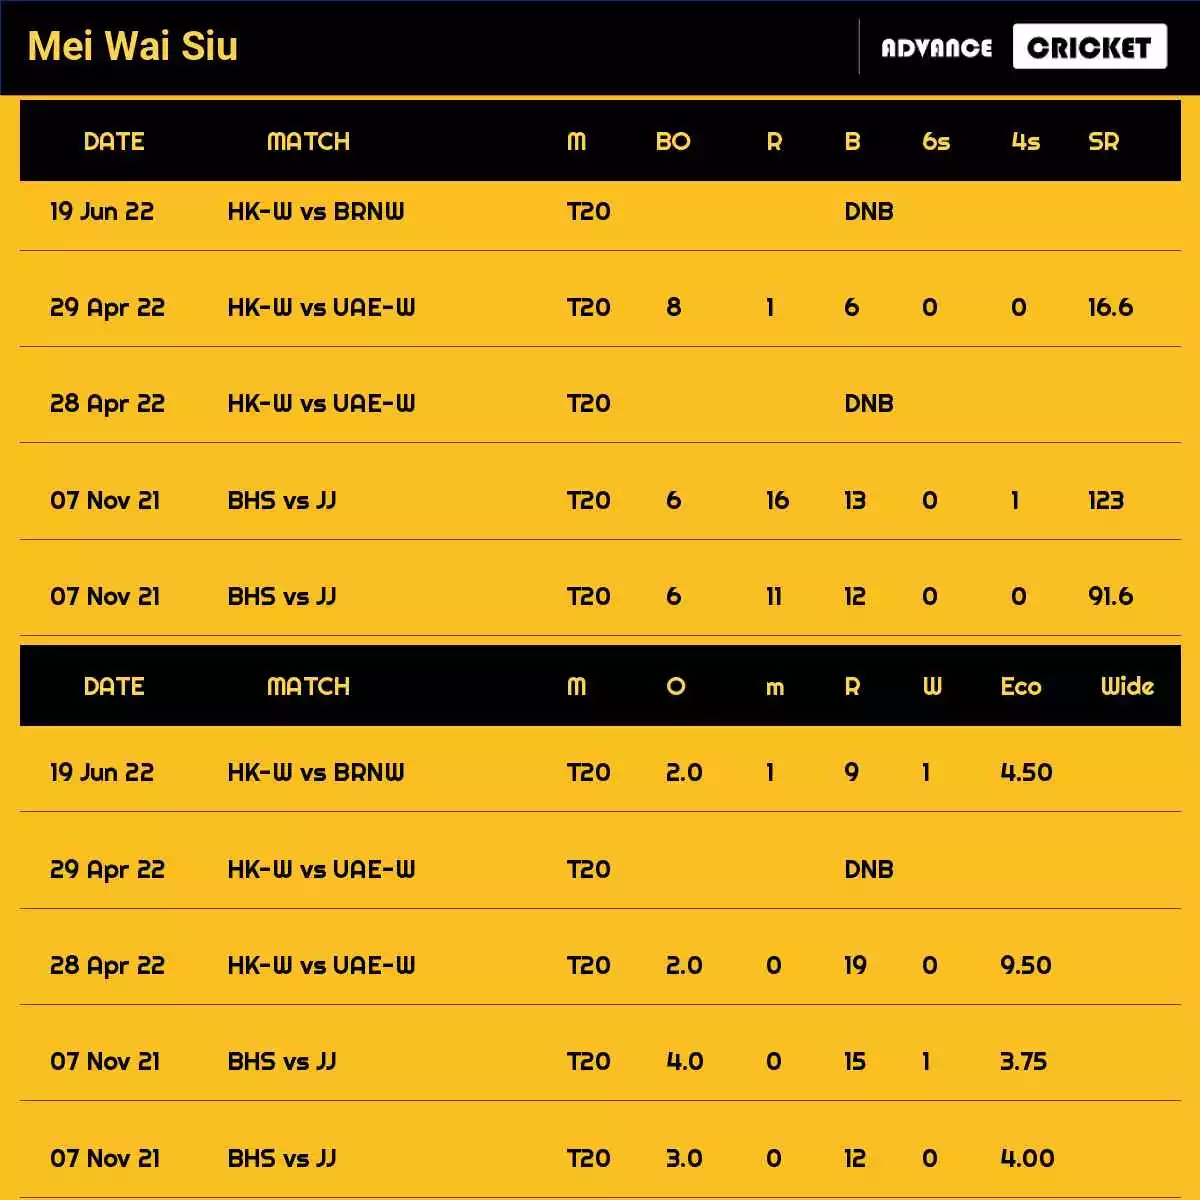 Mei Wai Siu Cricketer - Dream11, Records, Stats, Performance